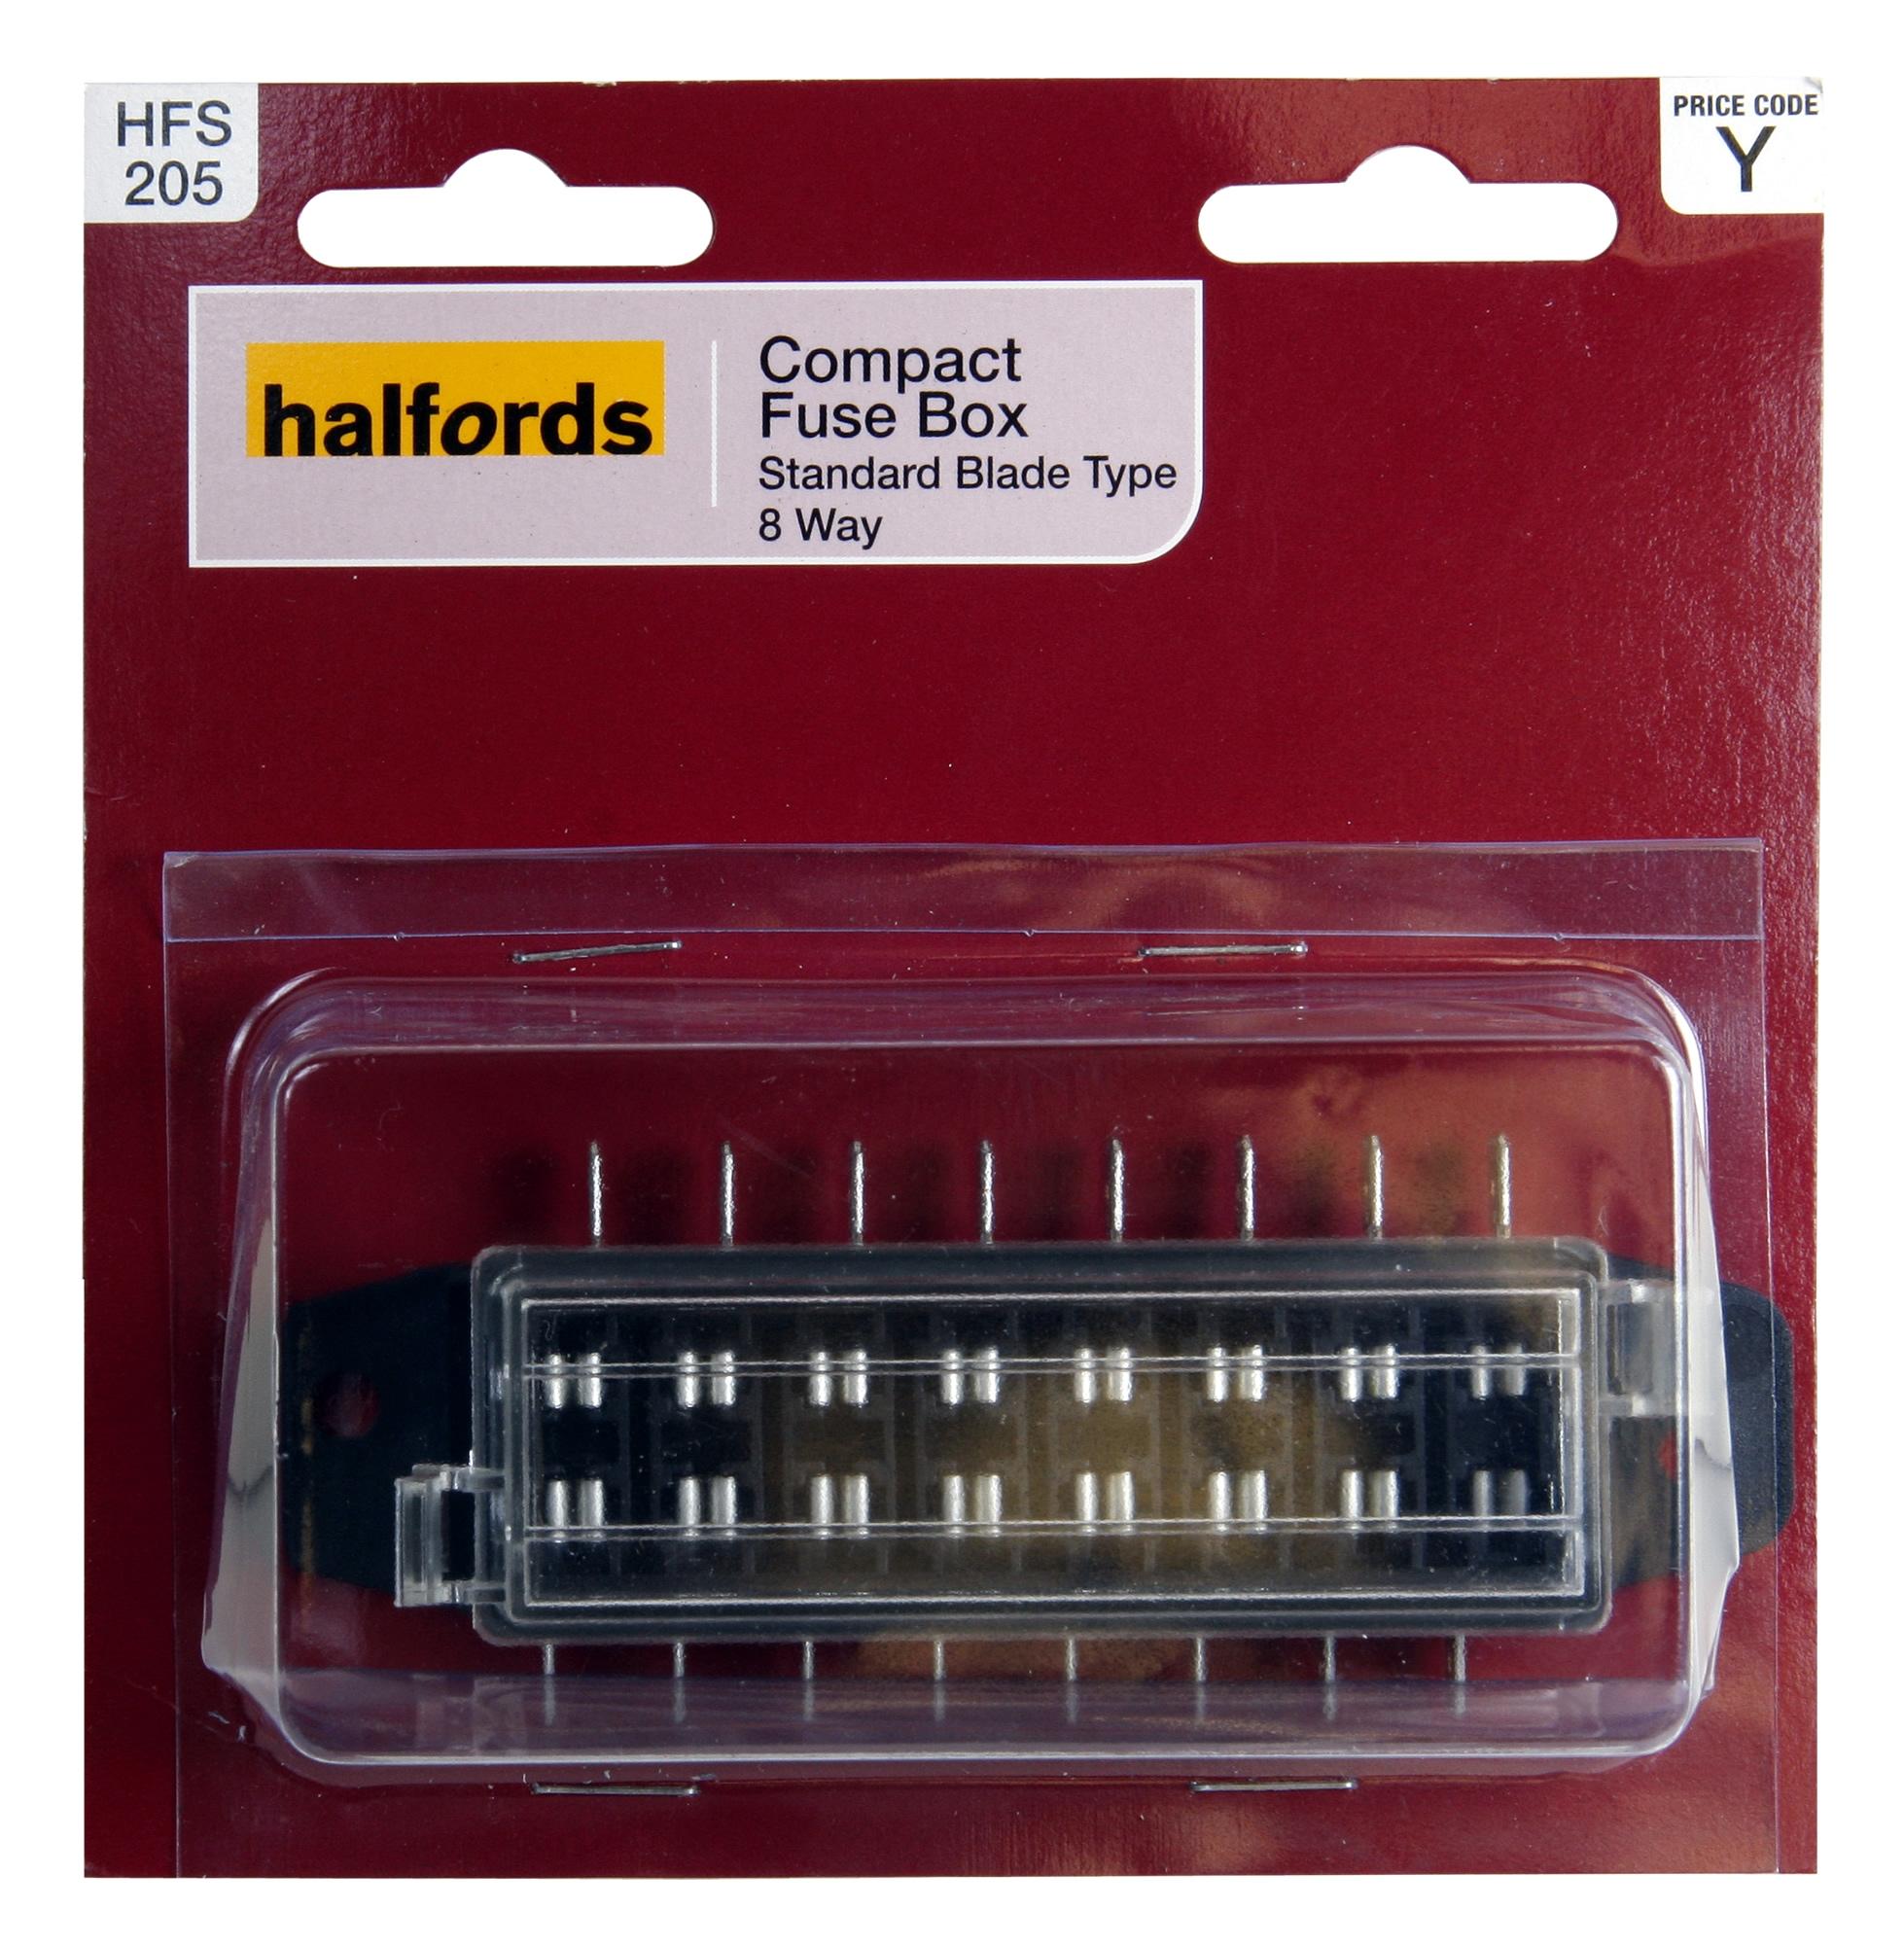 Halfords Compact Fuse Box 8-Way (Hfs205)